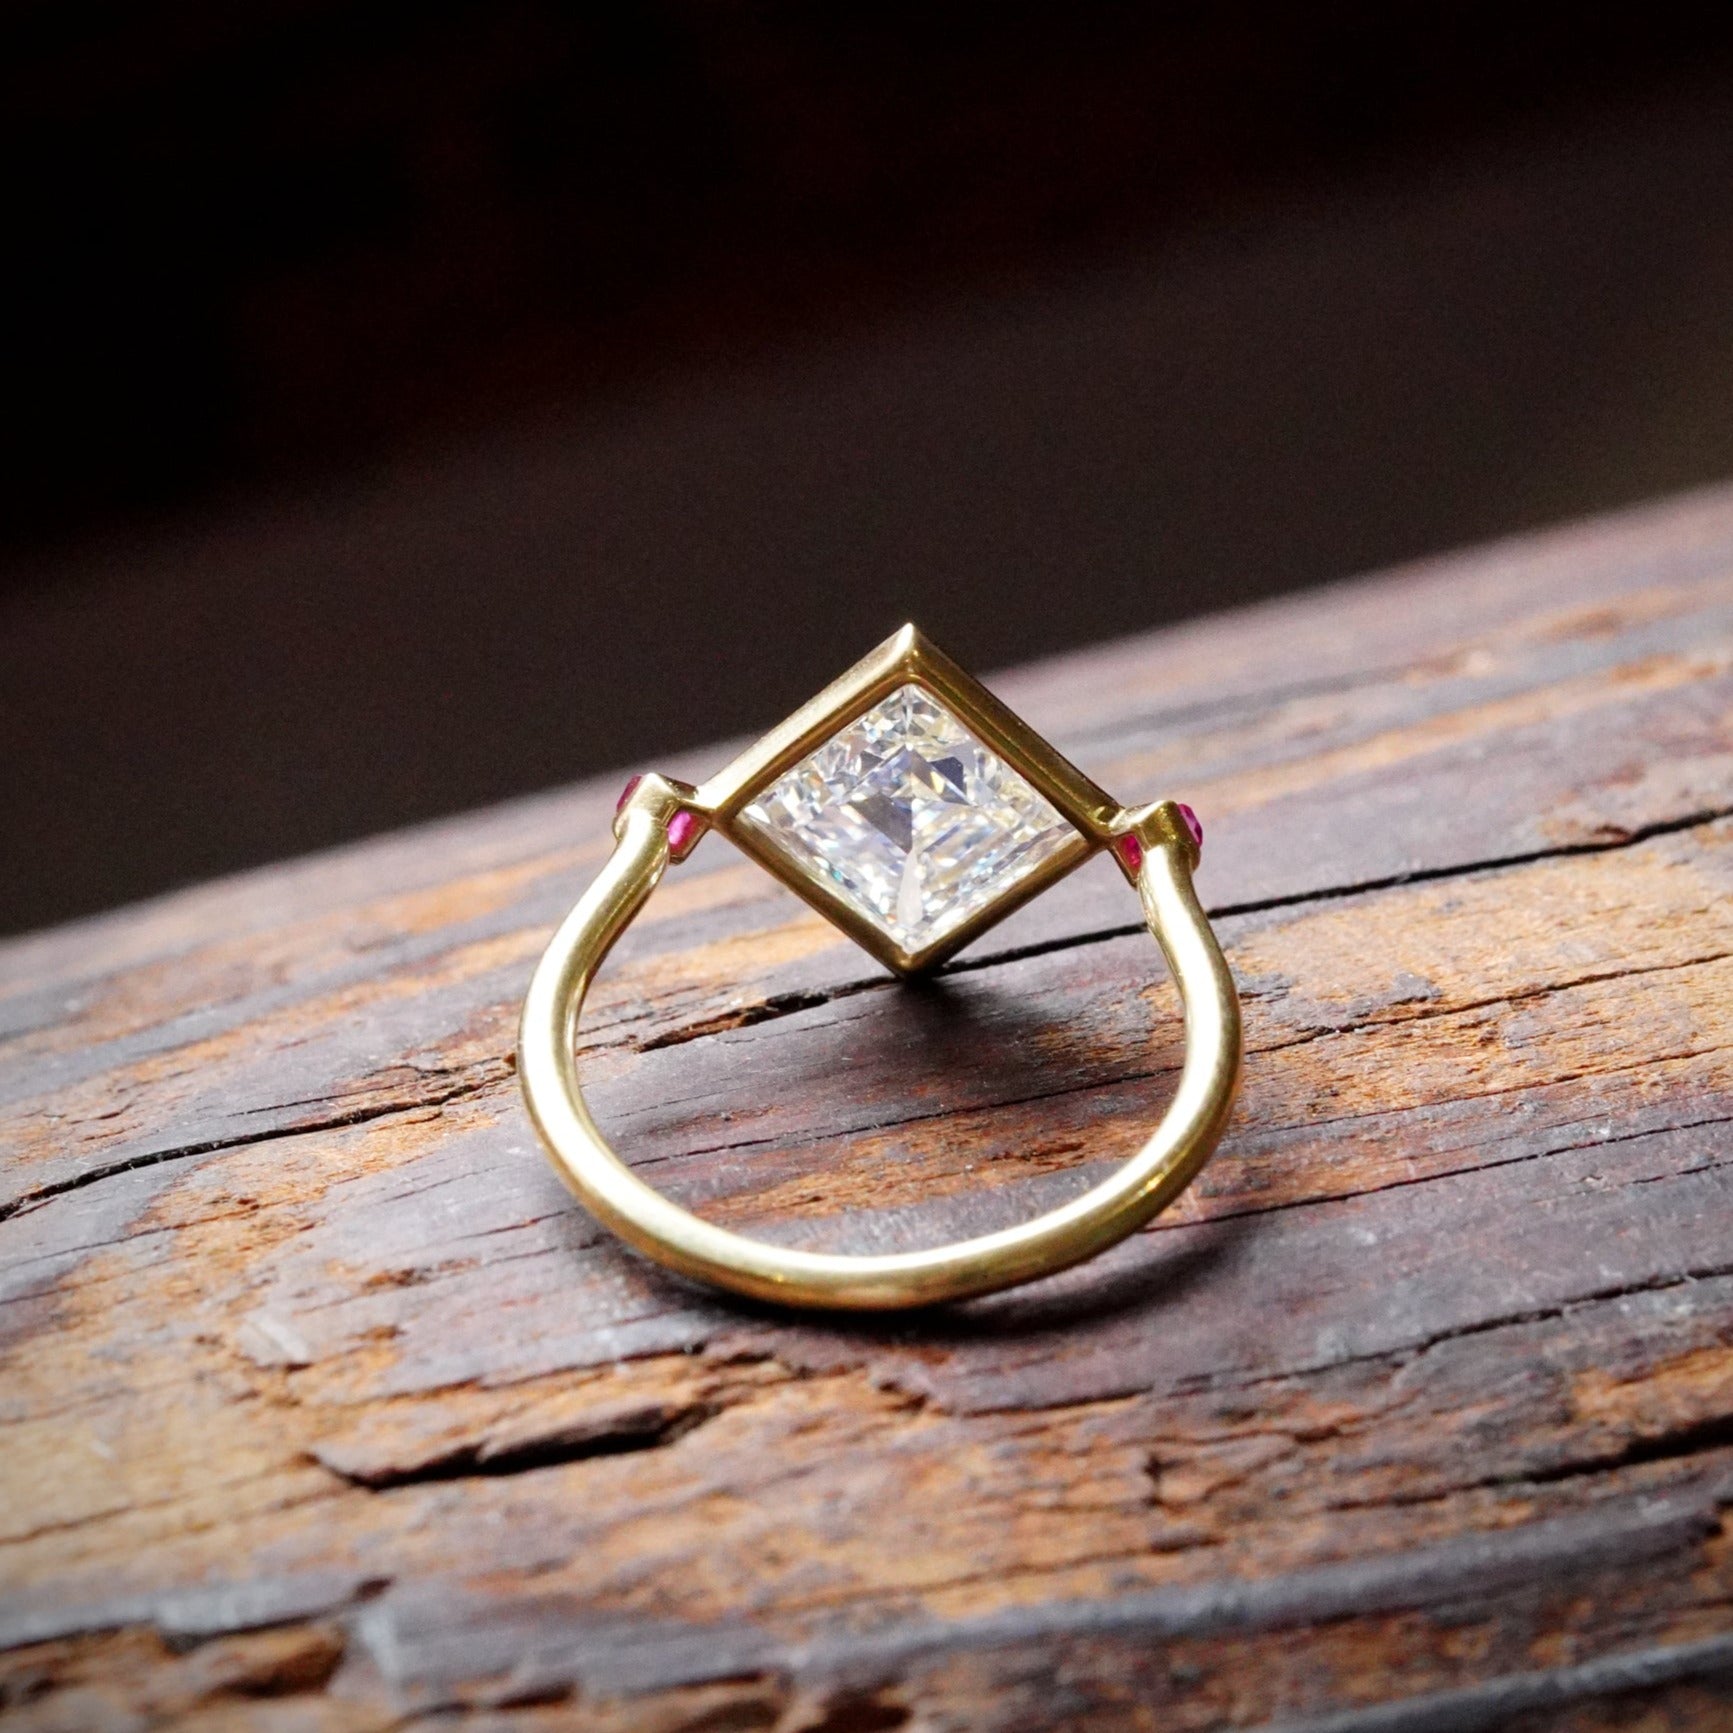 Jogani Art Deco-Inspired 3.03ct Lozenge Diamond Ring with Rubies in 18K Gold 2